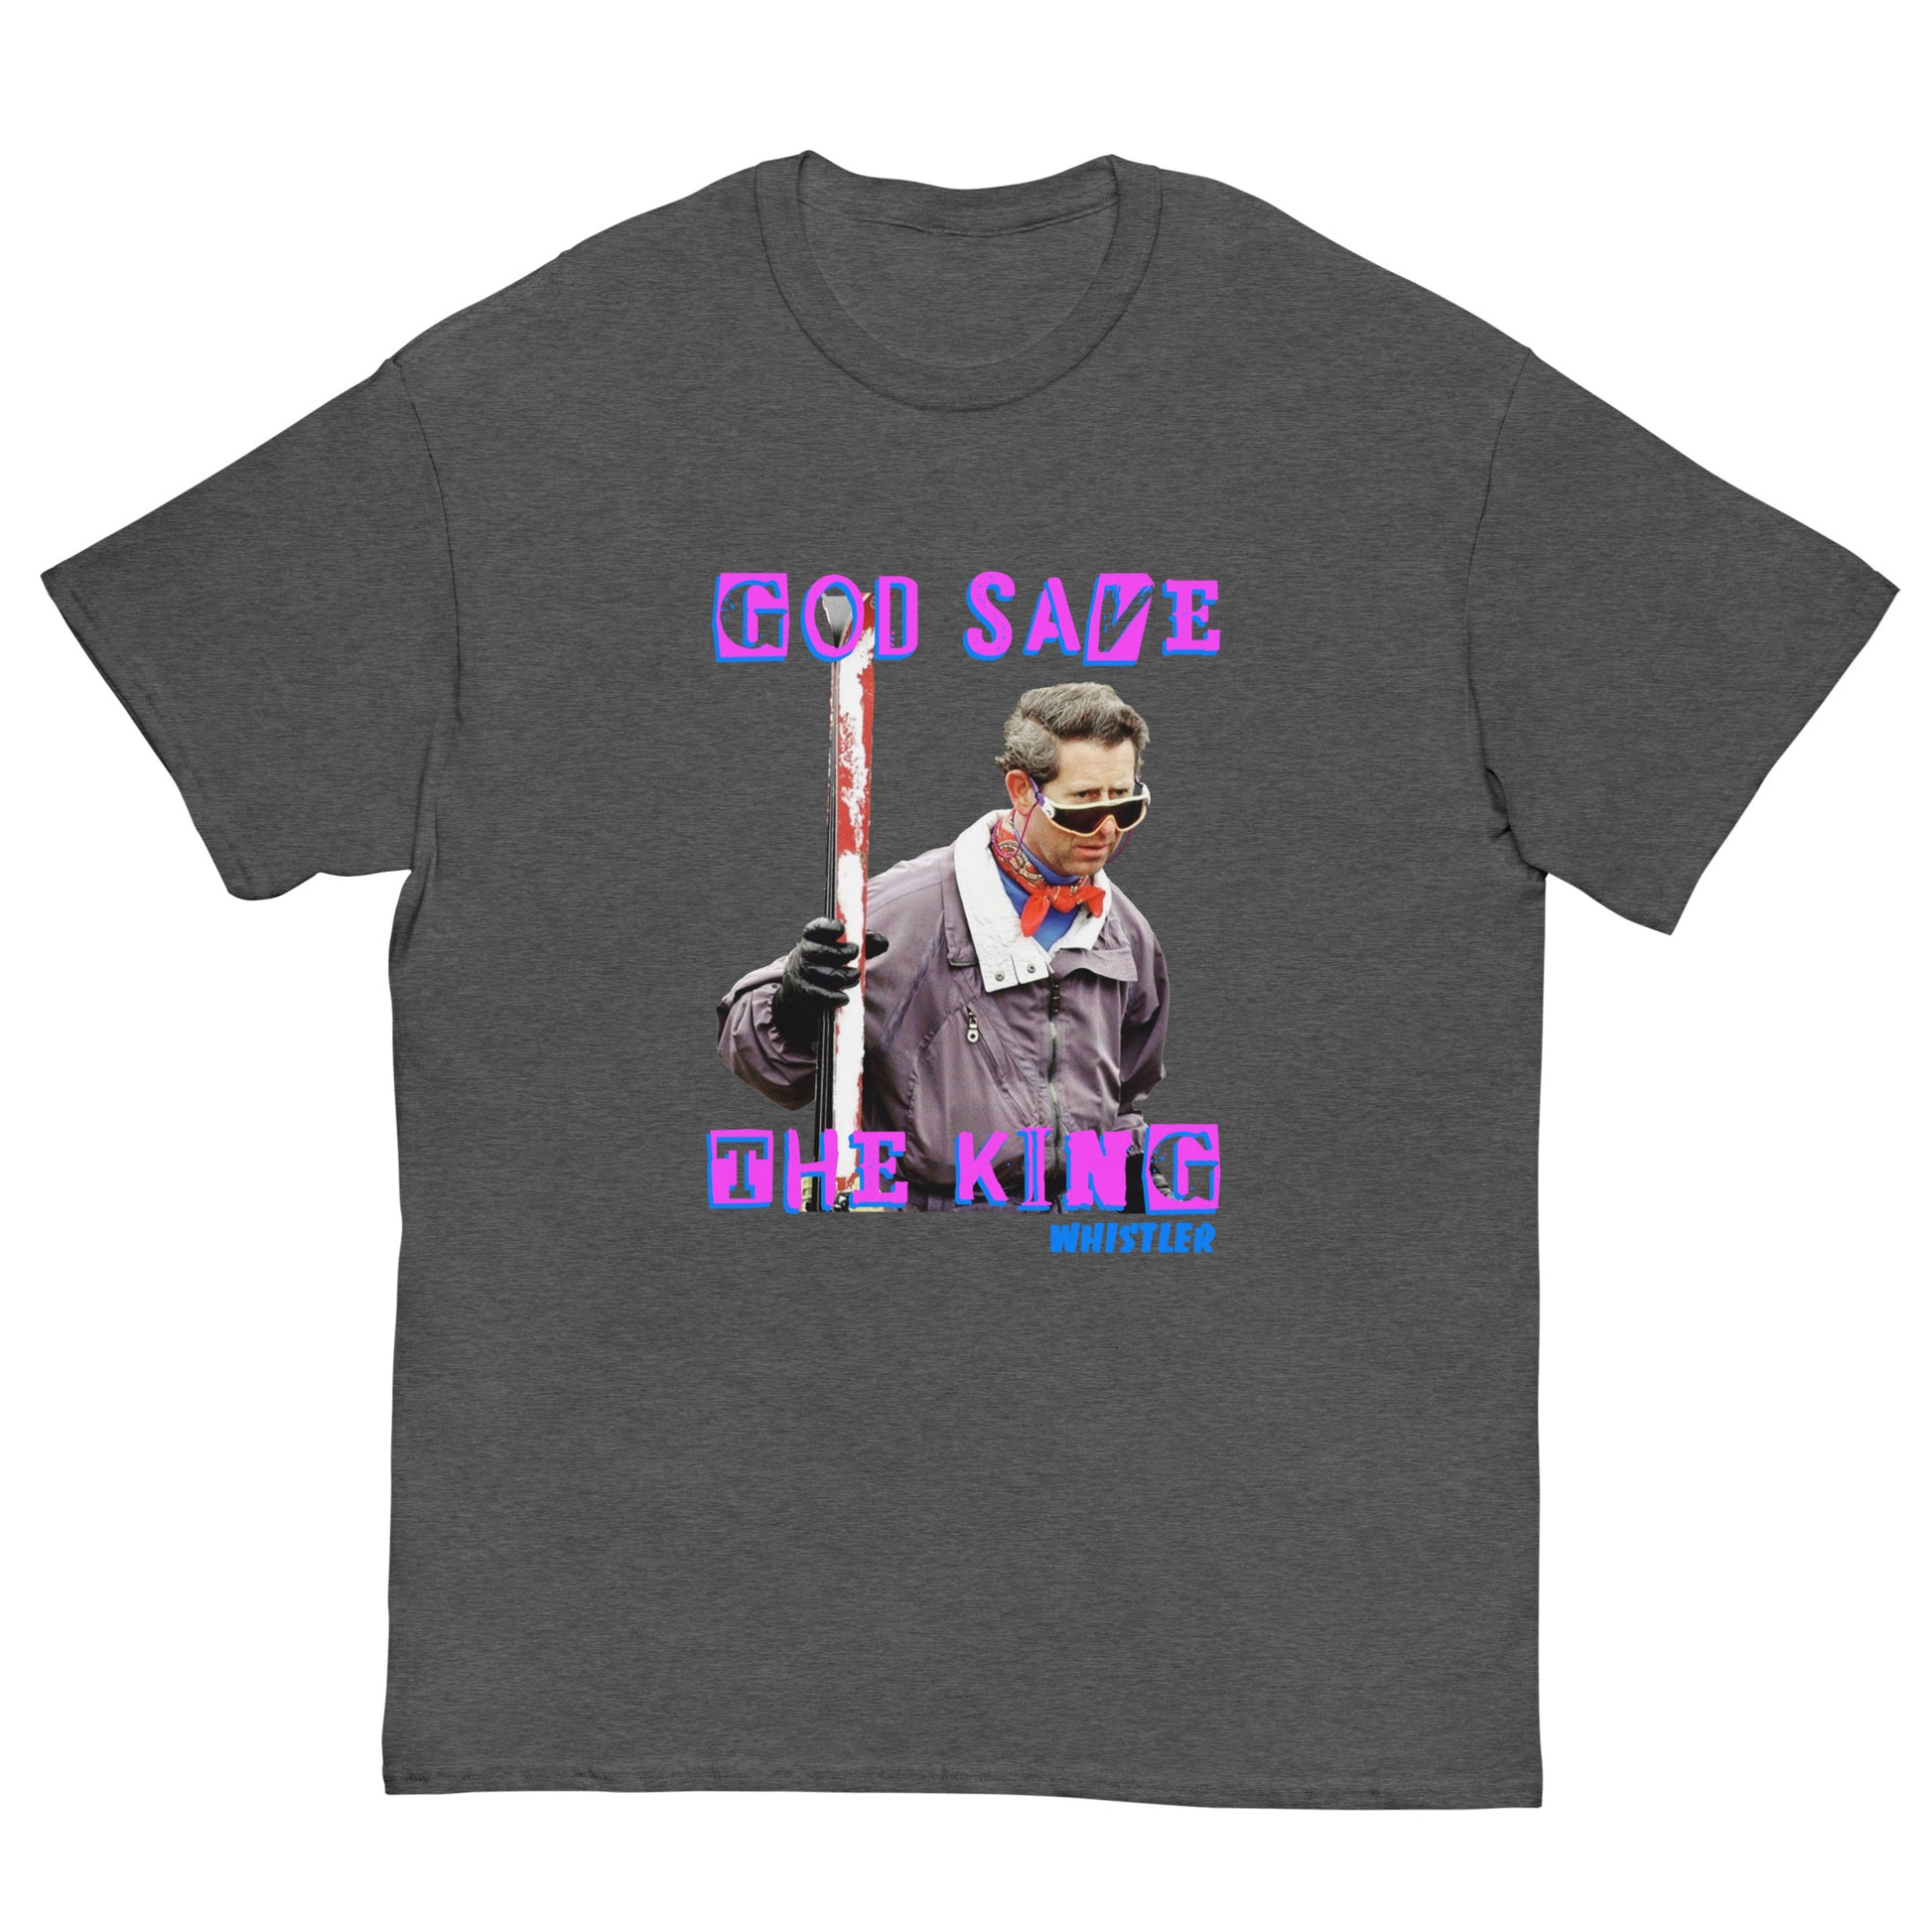 printed t-shirt god save the king whistler grey